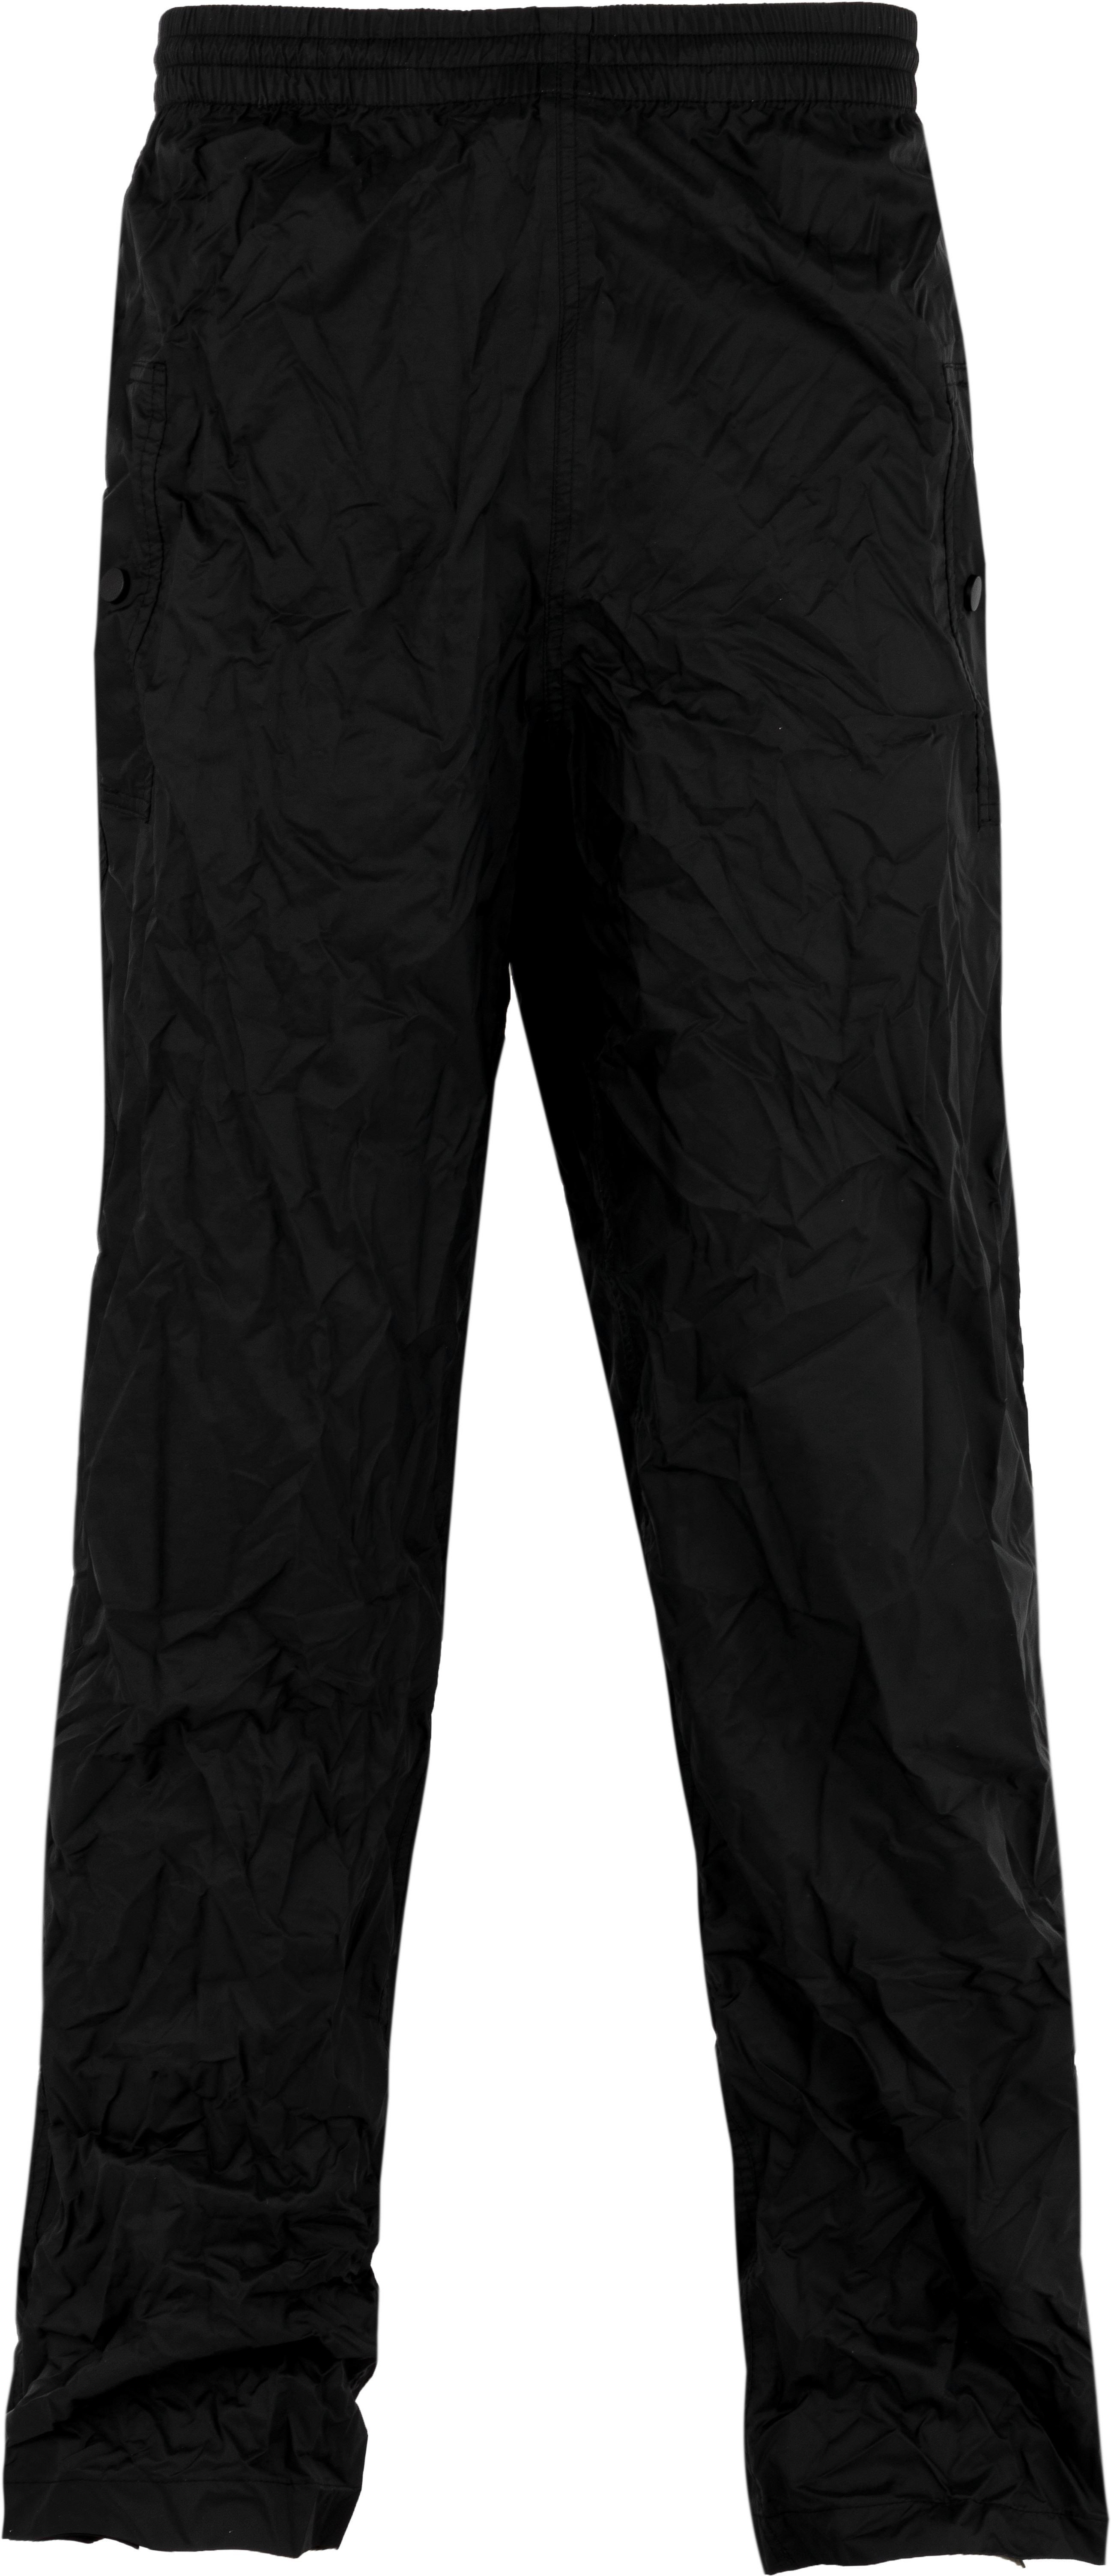 Spodnie Tenson Crest Pants, czarne